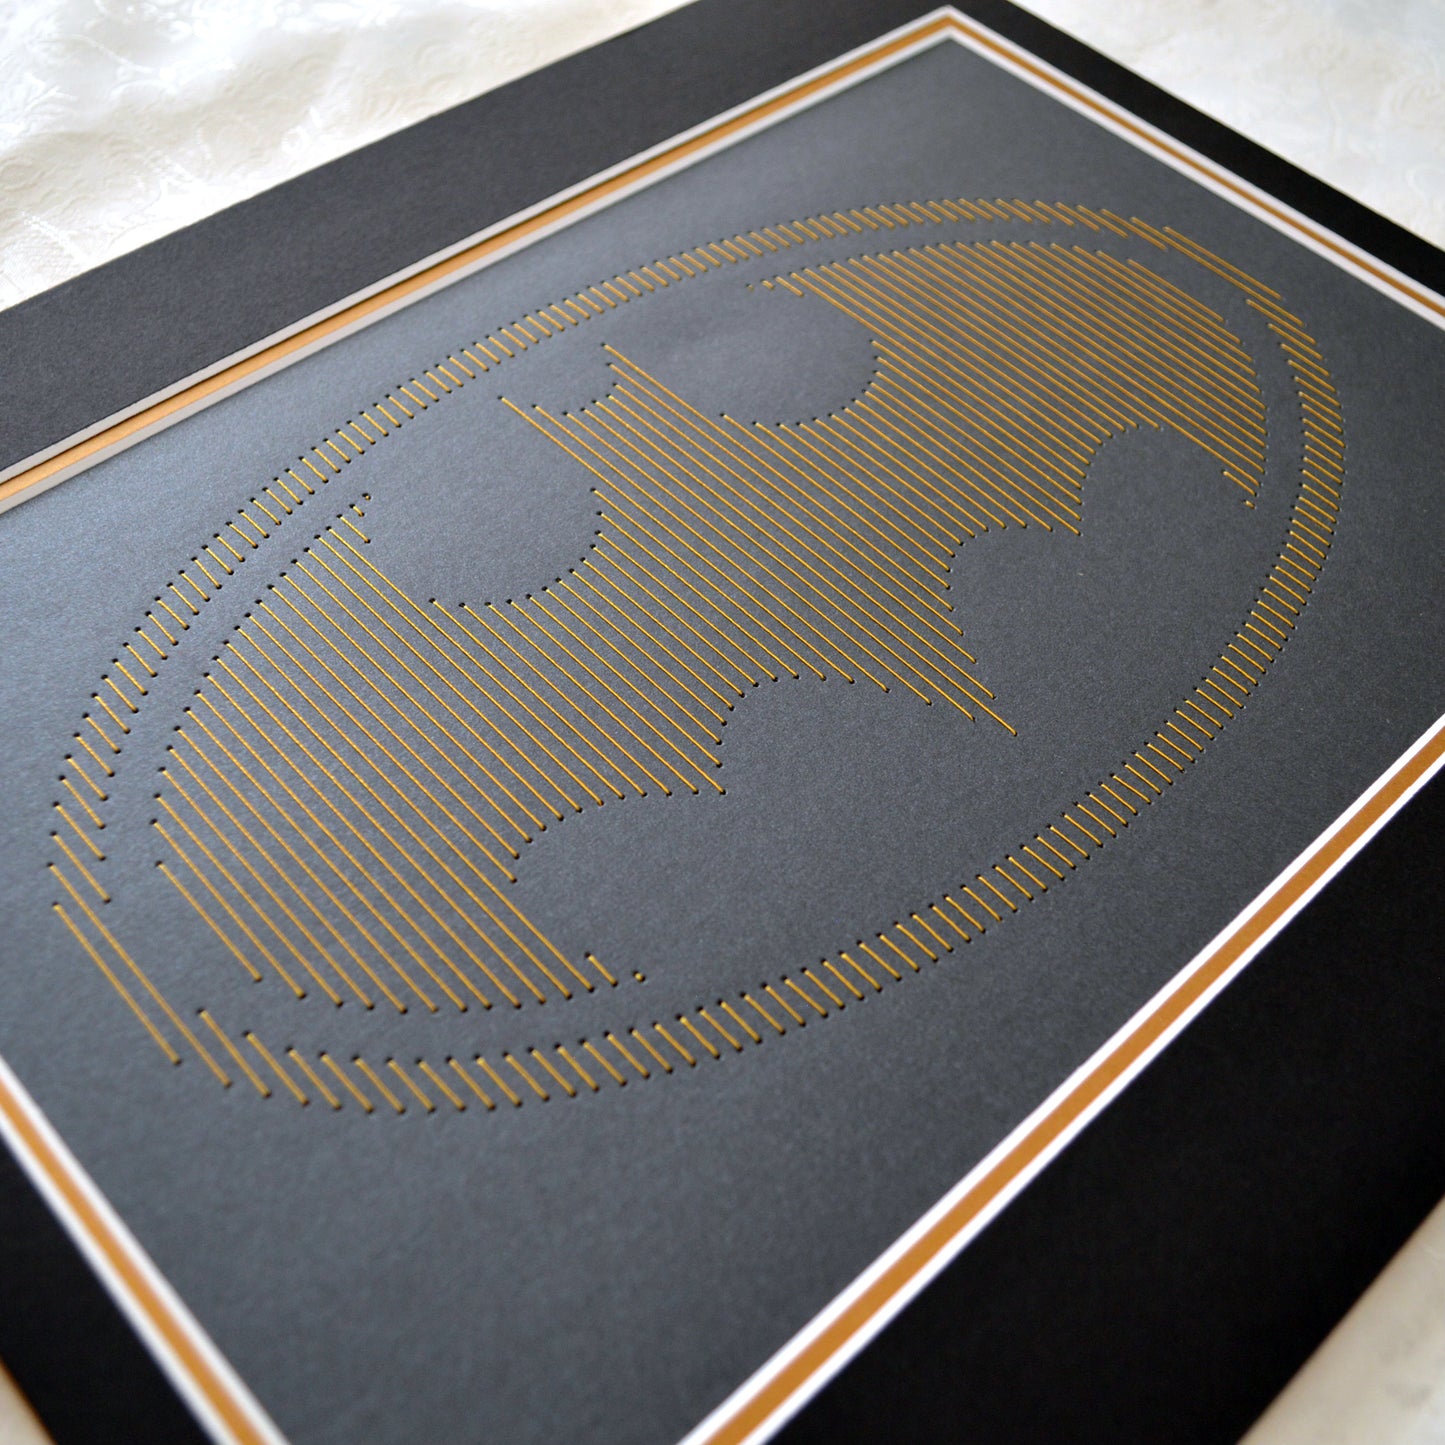 Batman Inspired Hand-Stitched Artwork (Black Card)